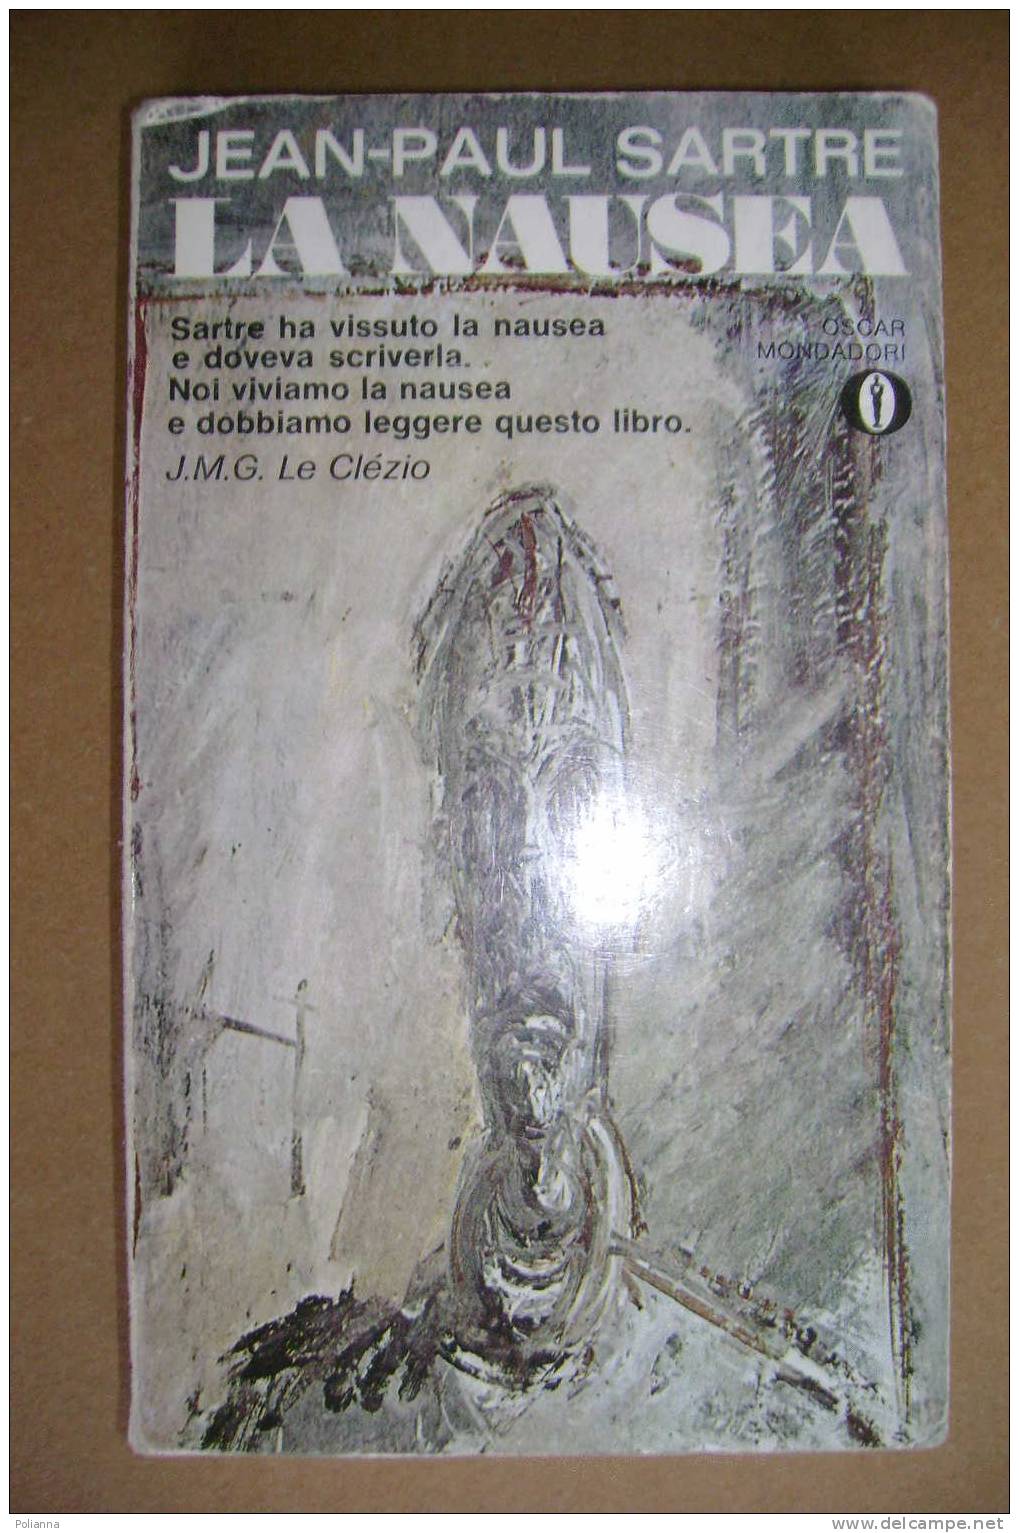 PAI/7 Jean Paul Sartre LA NAUSEA Oscar Mondadori 1970 - Novelle, Racconti